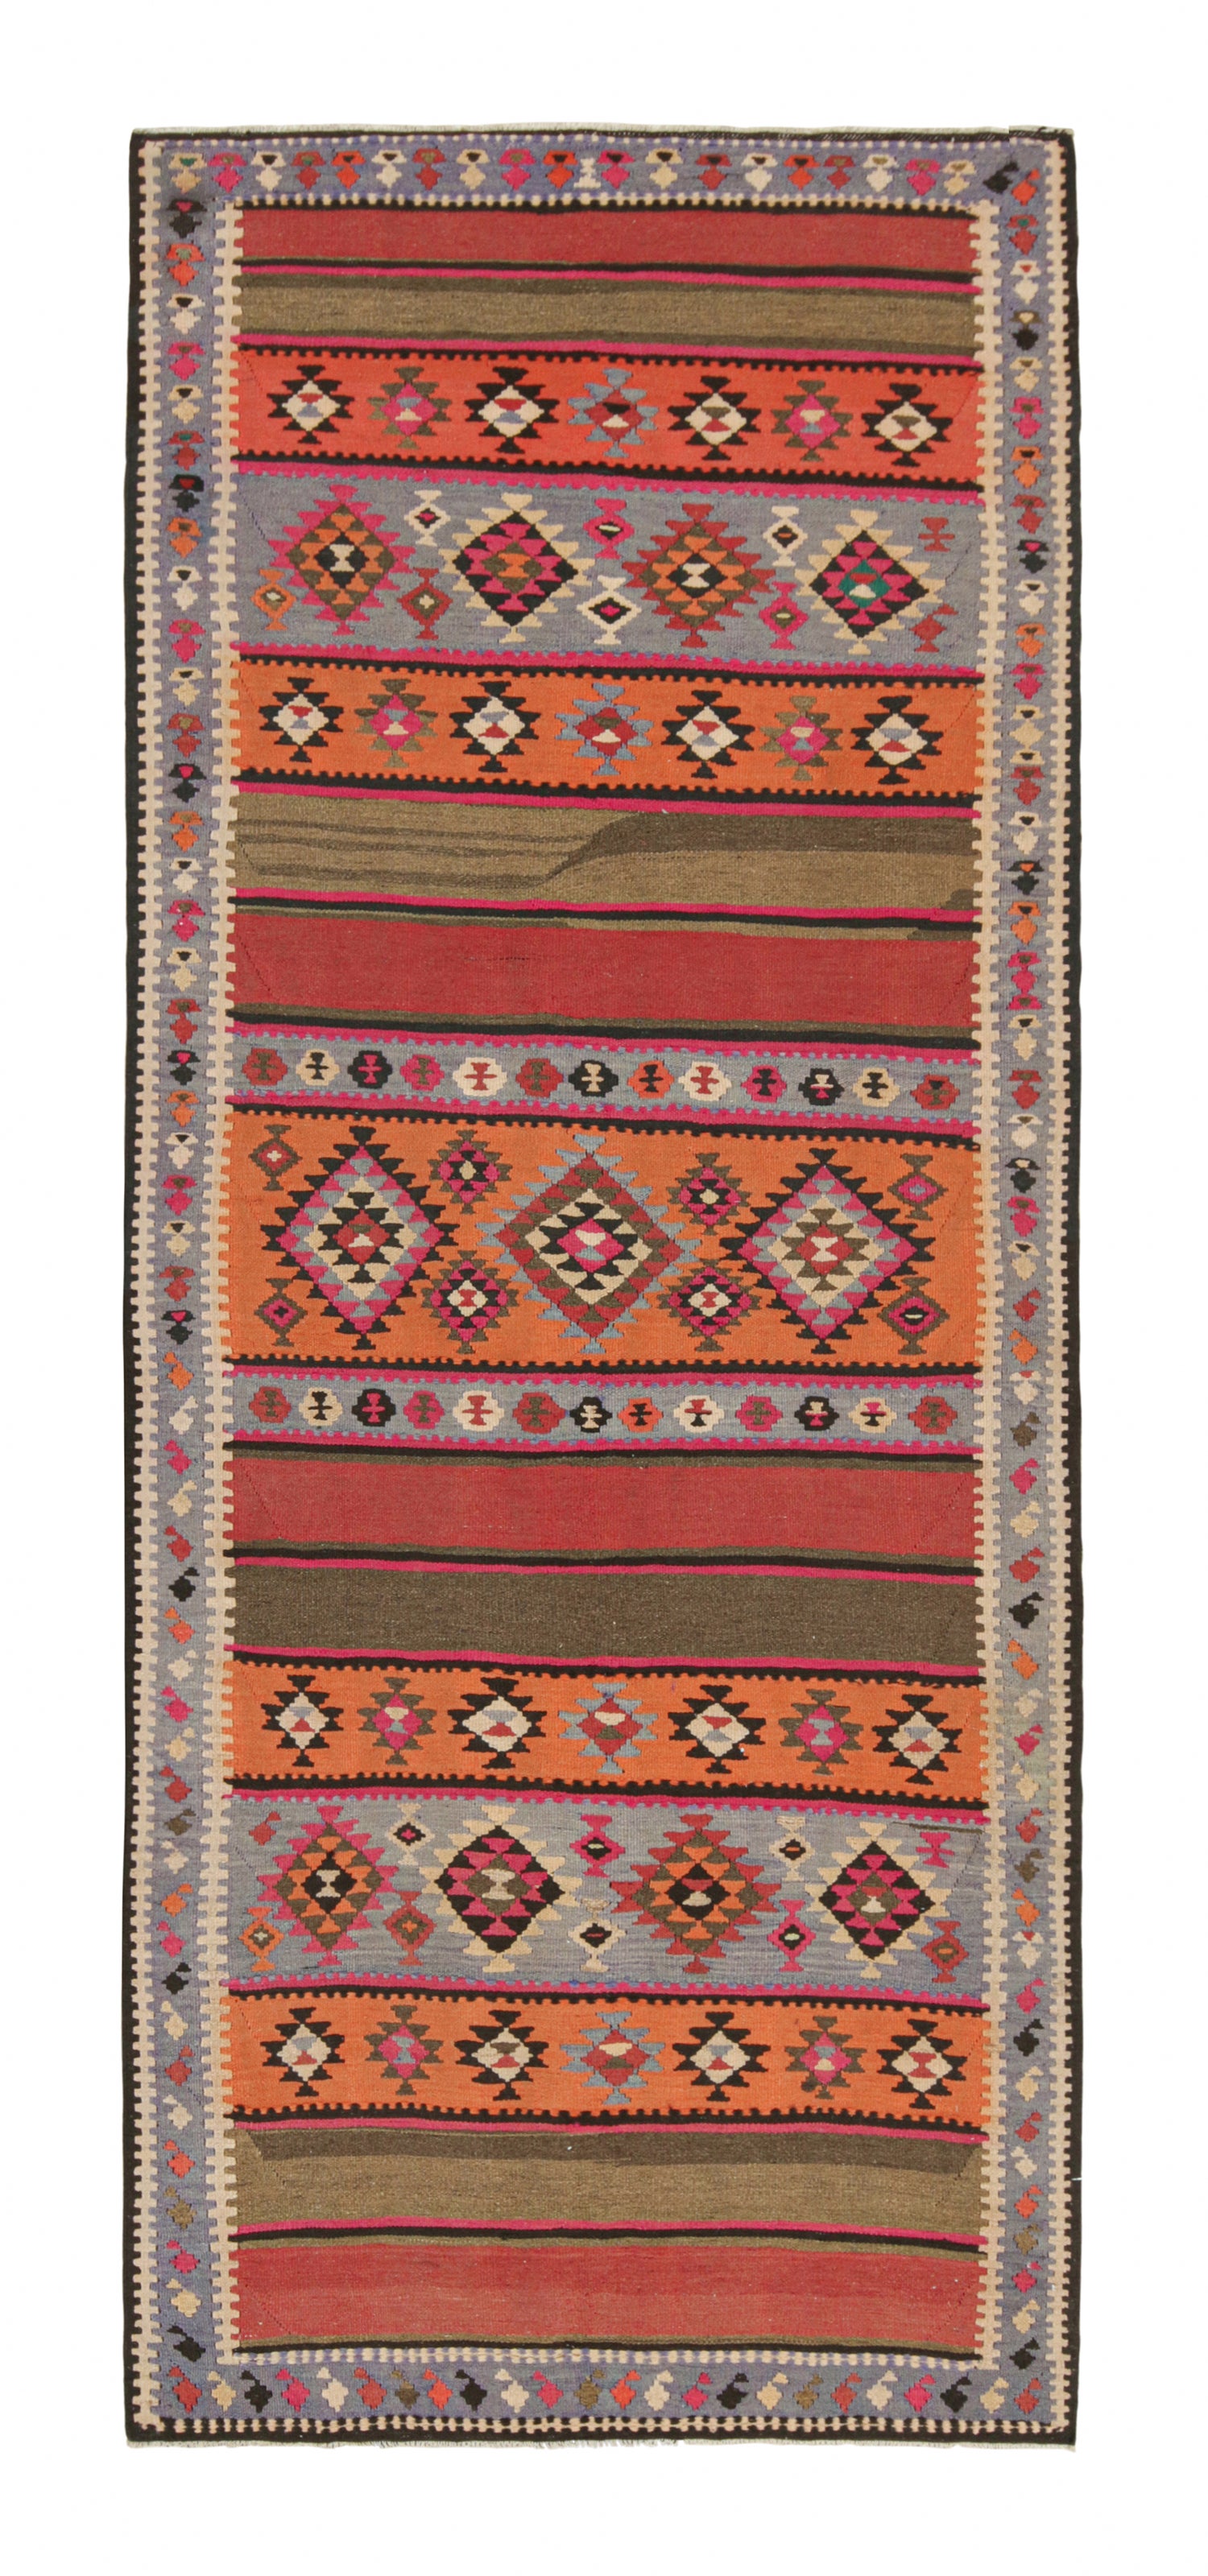 Vintage Northwest Persian Kilim with Vibrant Geometric Patterns by Rug & Kilim